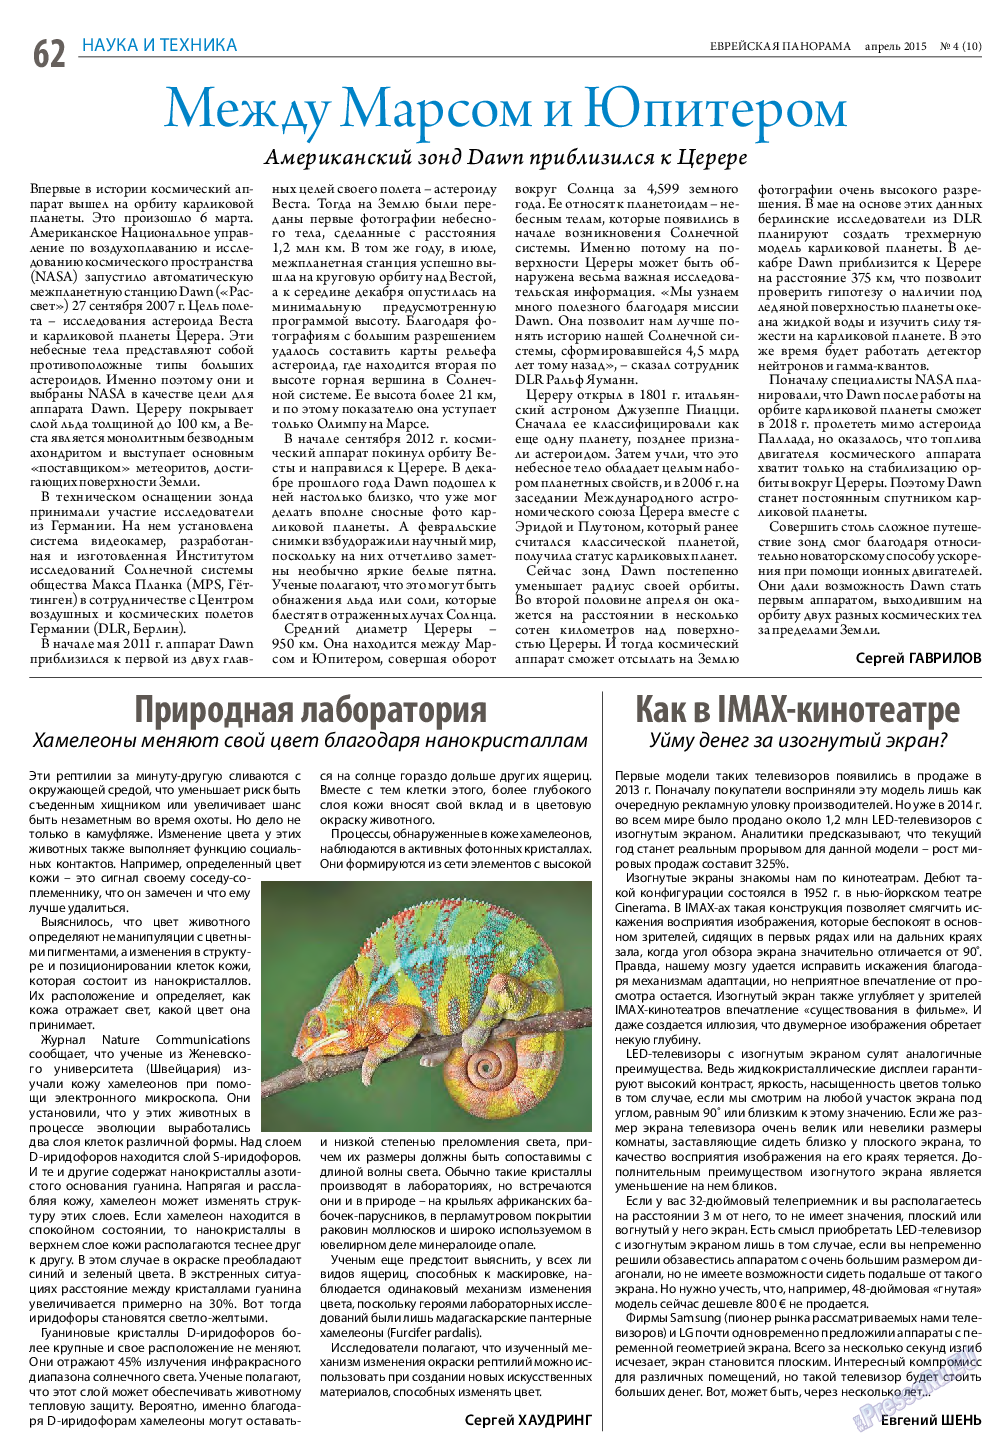 Еврейская панорама, газета. 2015 №4 стр.62